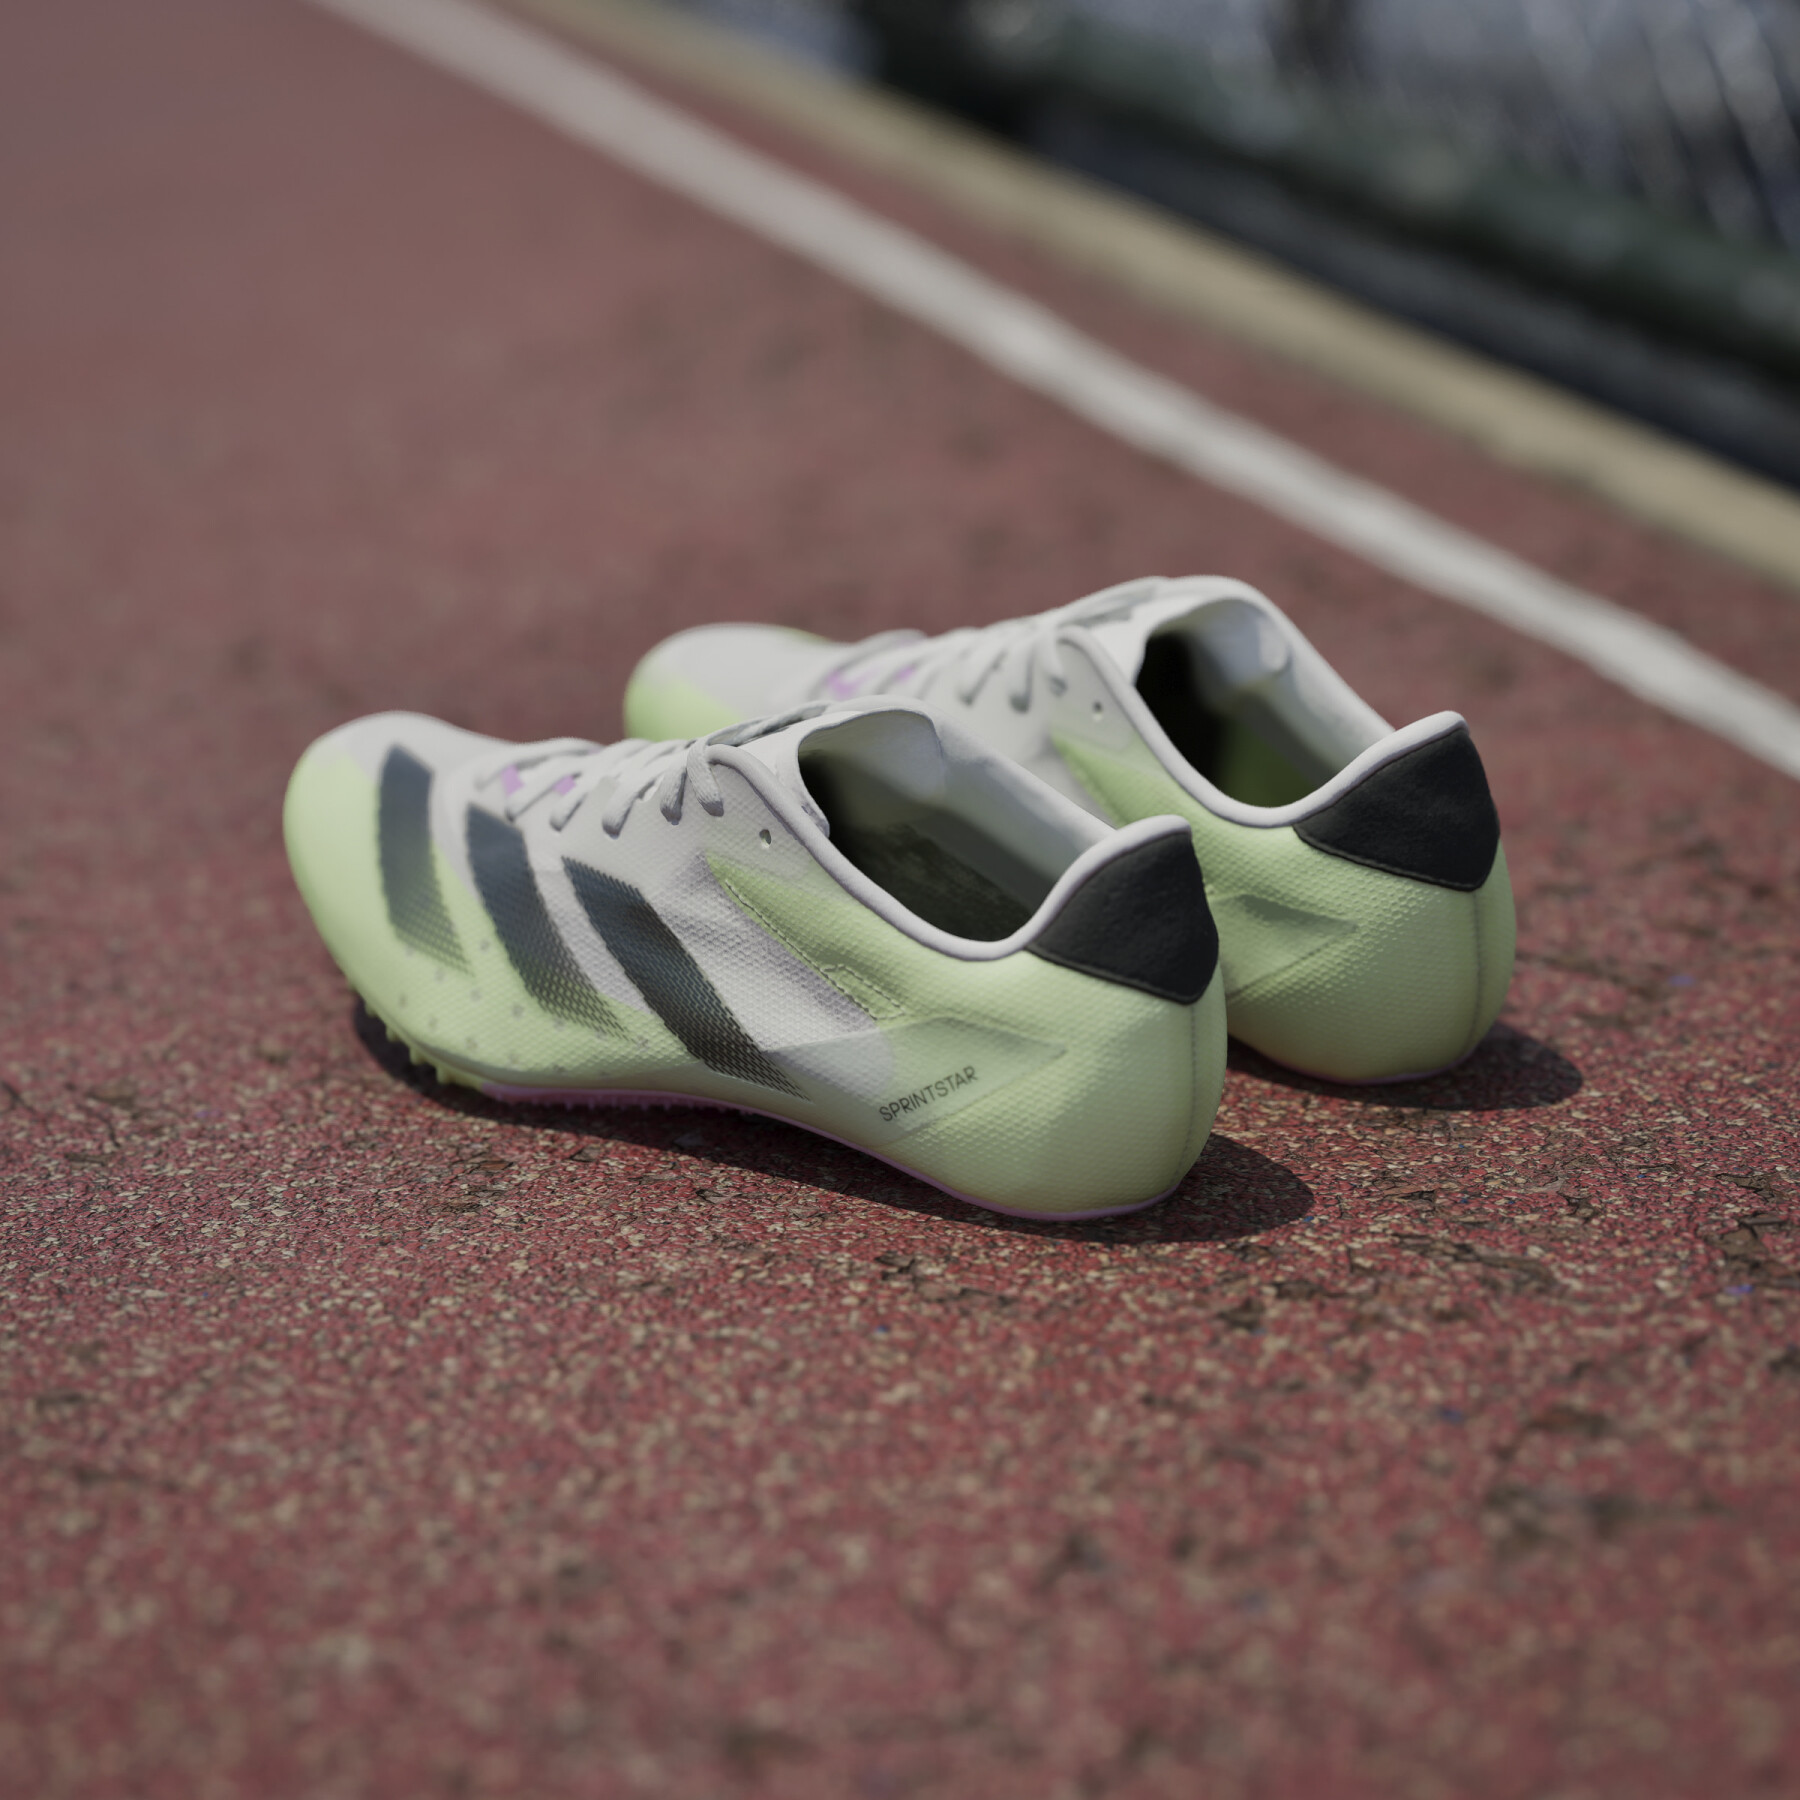 Scarpe chiodate atletica Adidas Adizero Sprintstar